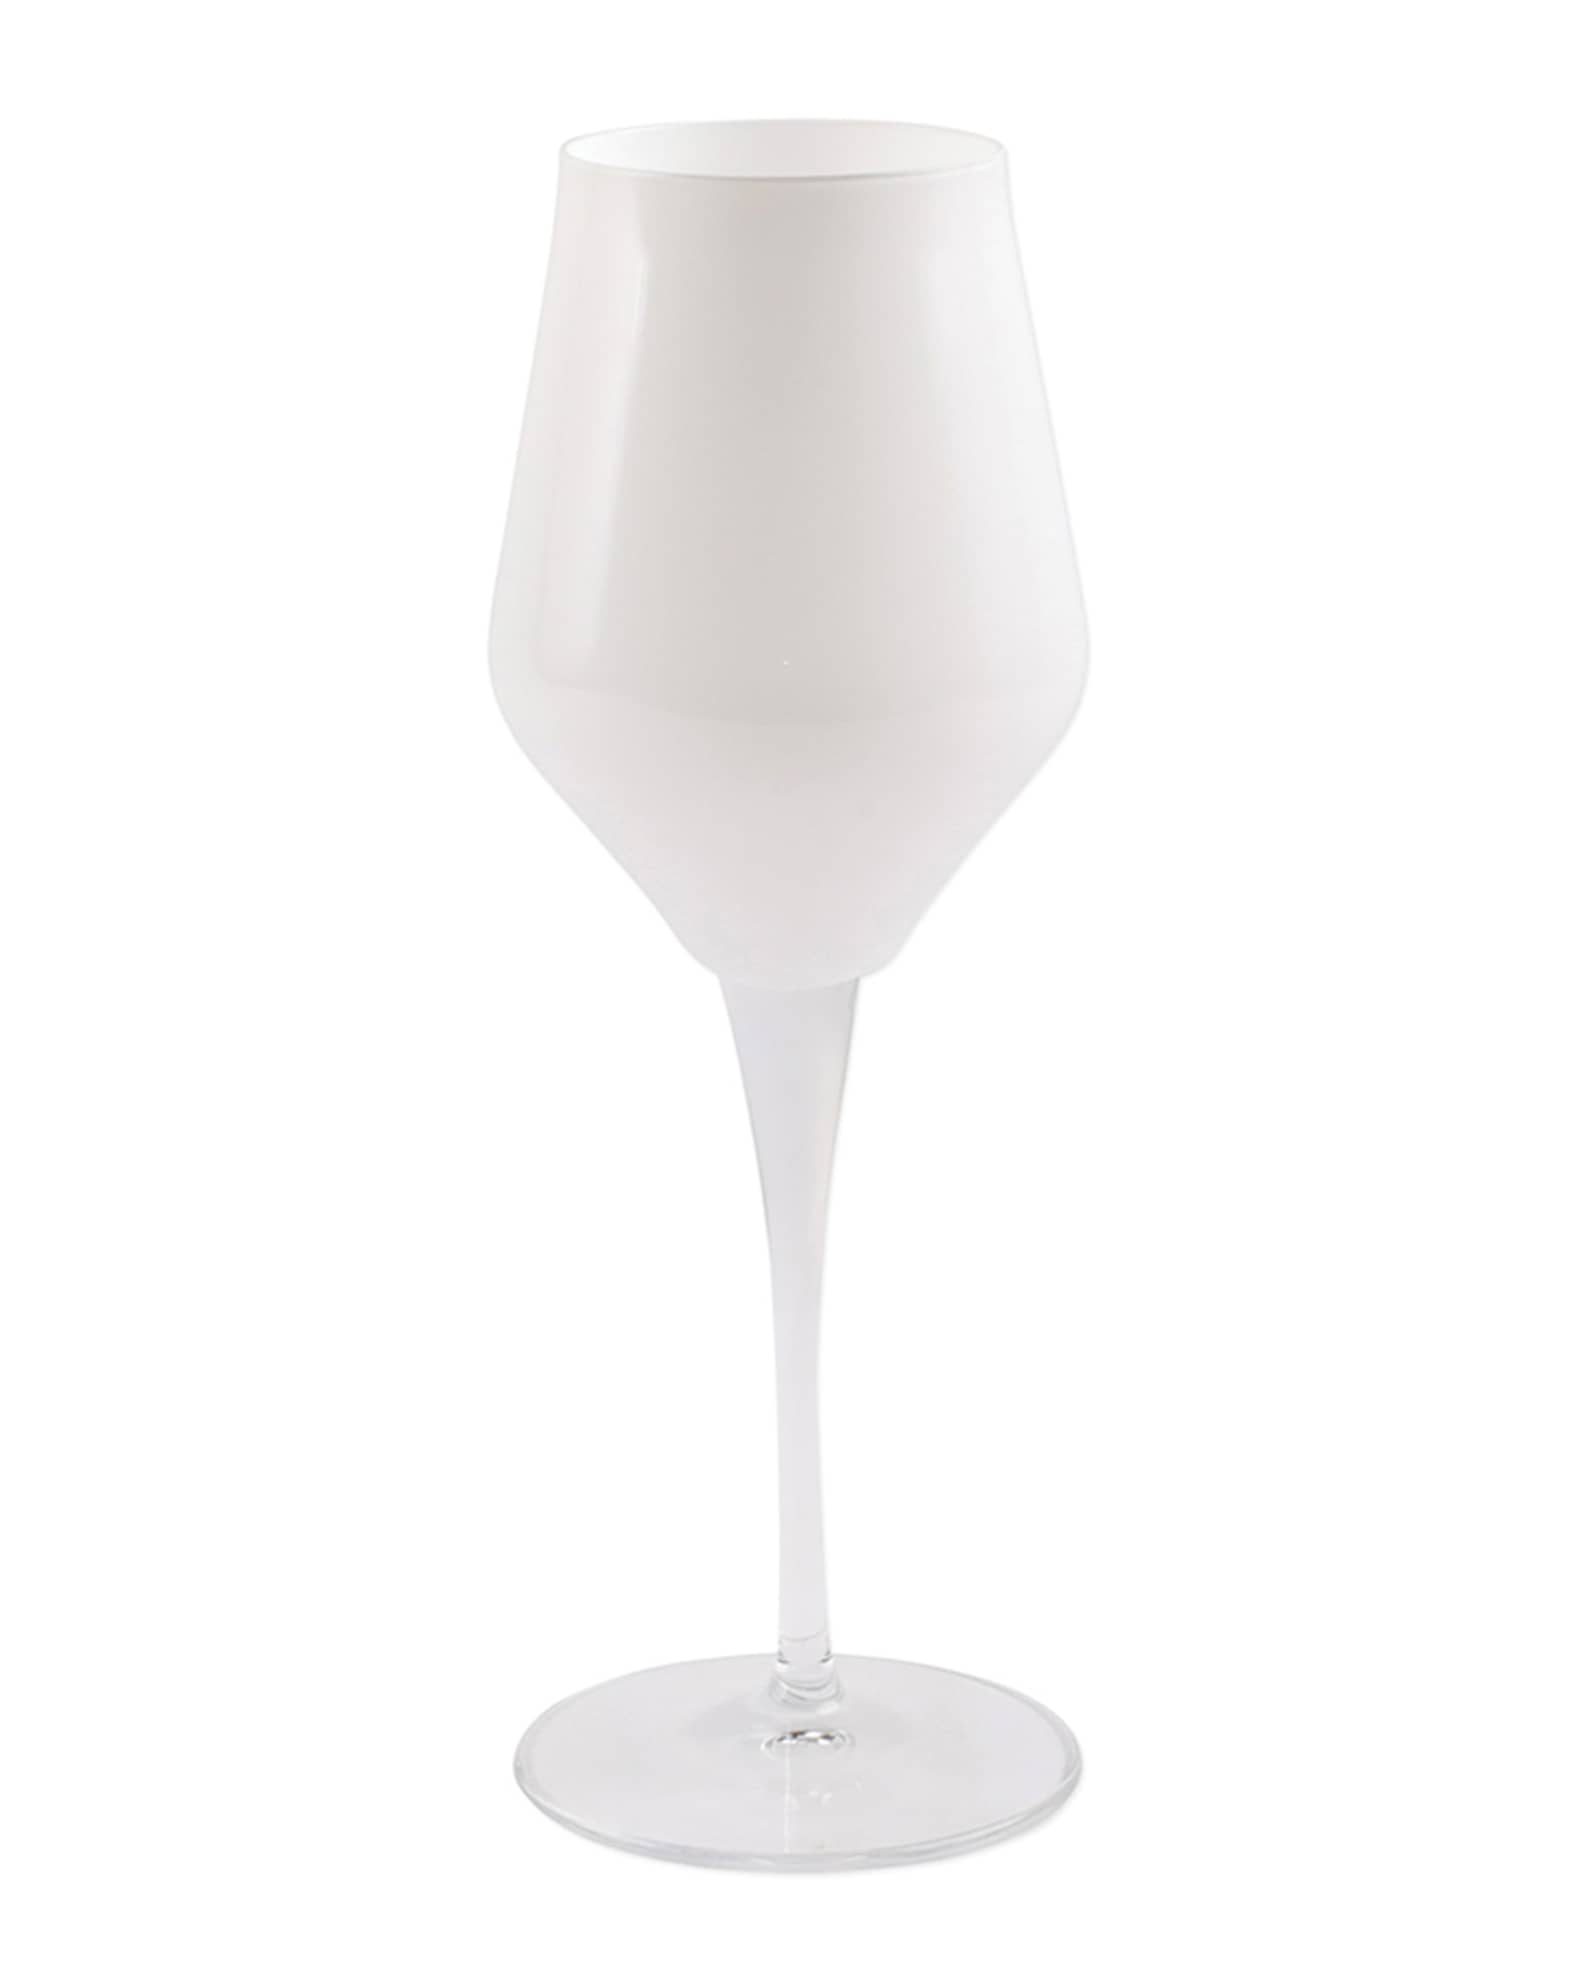 Vietri Contessa White Wine Glass